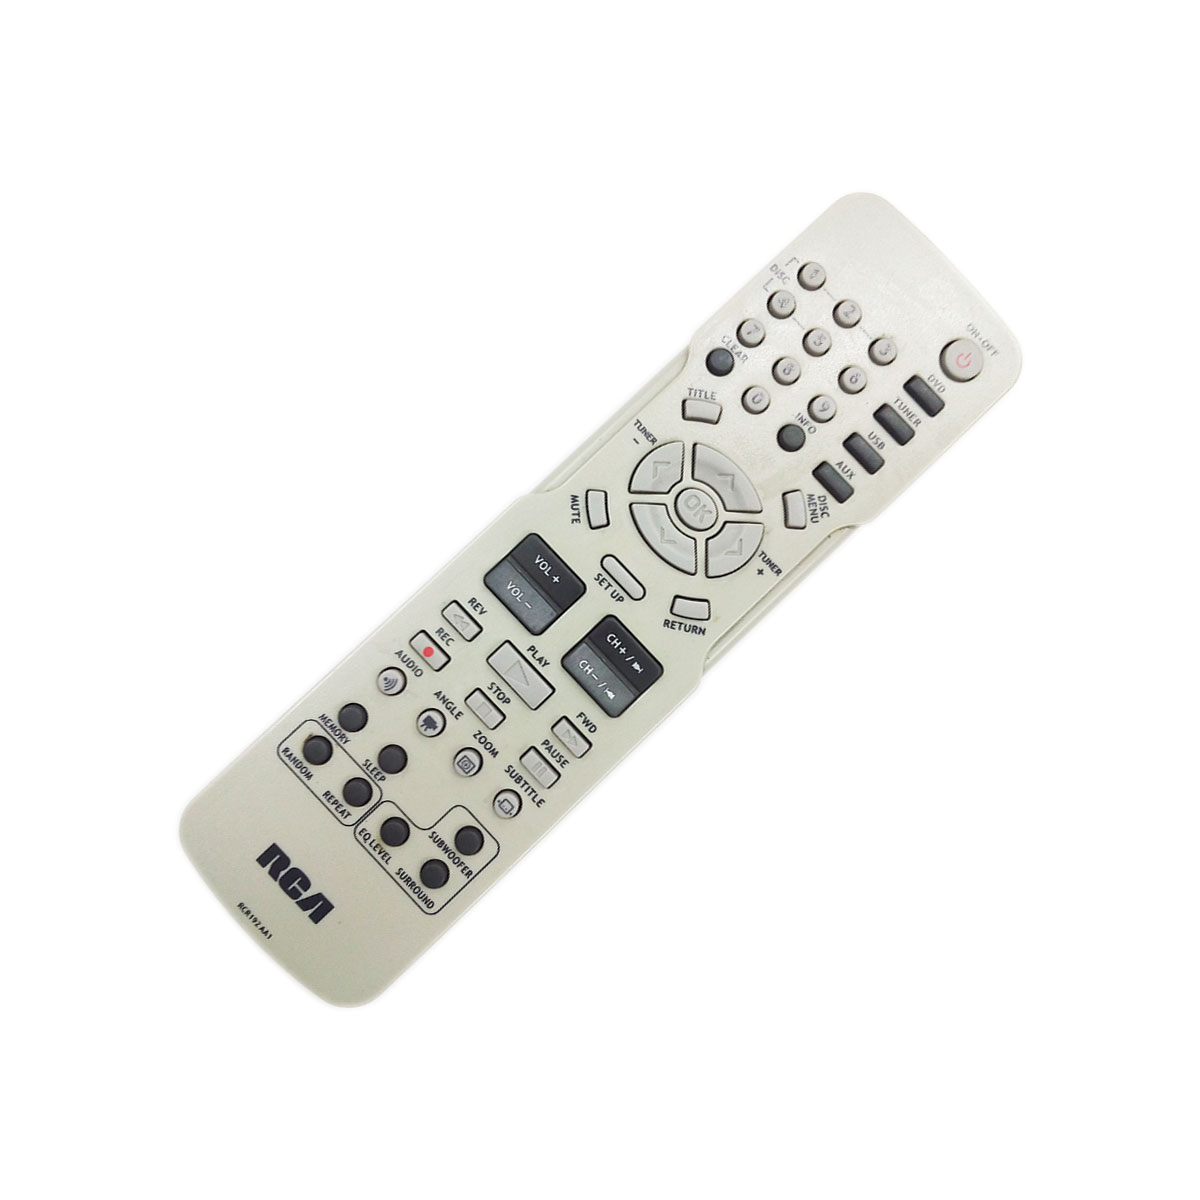 Original Home Theater Remote Control for RCA RTD258HTIB (USED